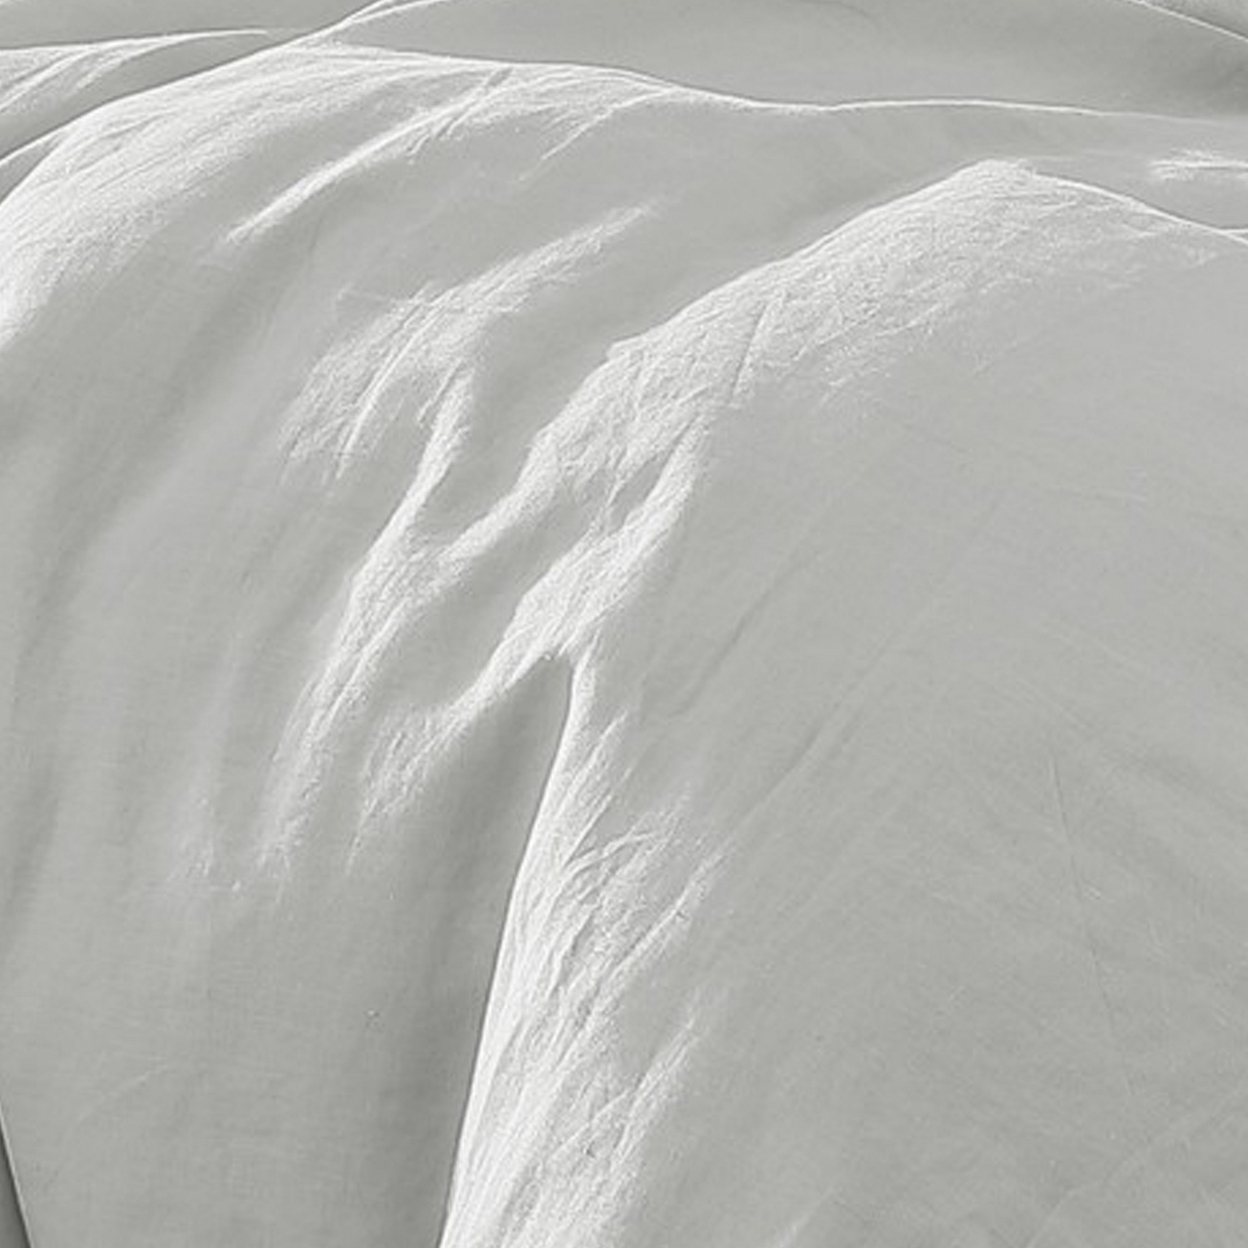 Edge 4 Piece King Size Duvet Comforter Set, Washed Linen, Cotton, Soft Gray - Saltoro Sherpi